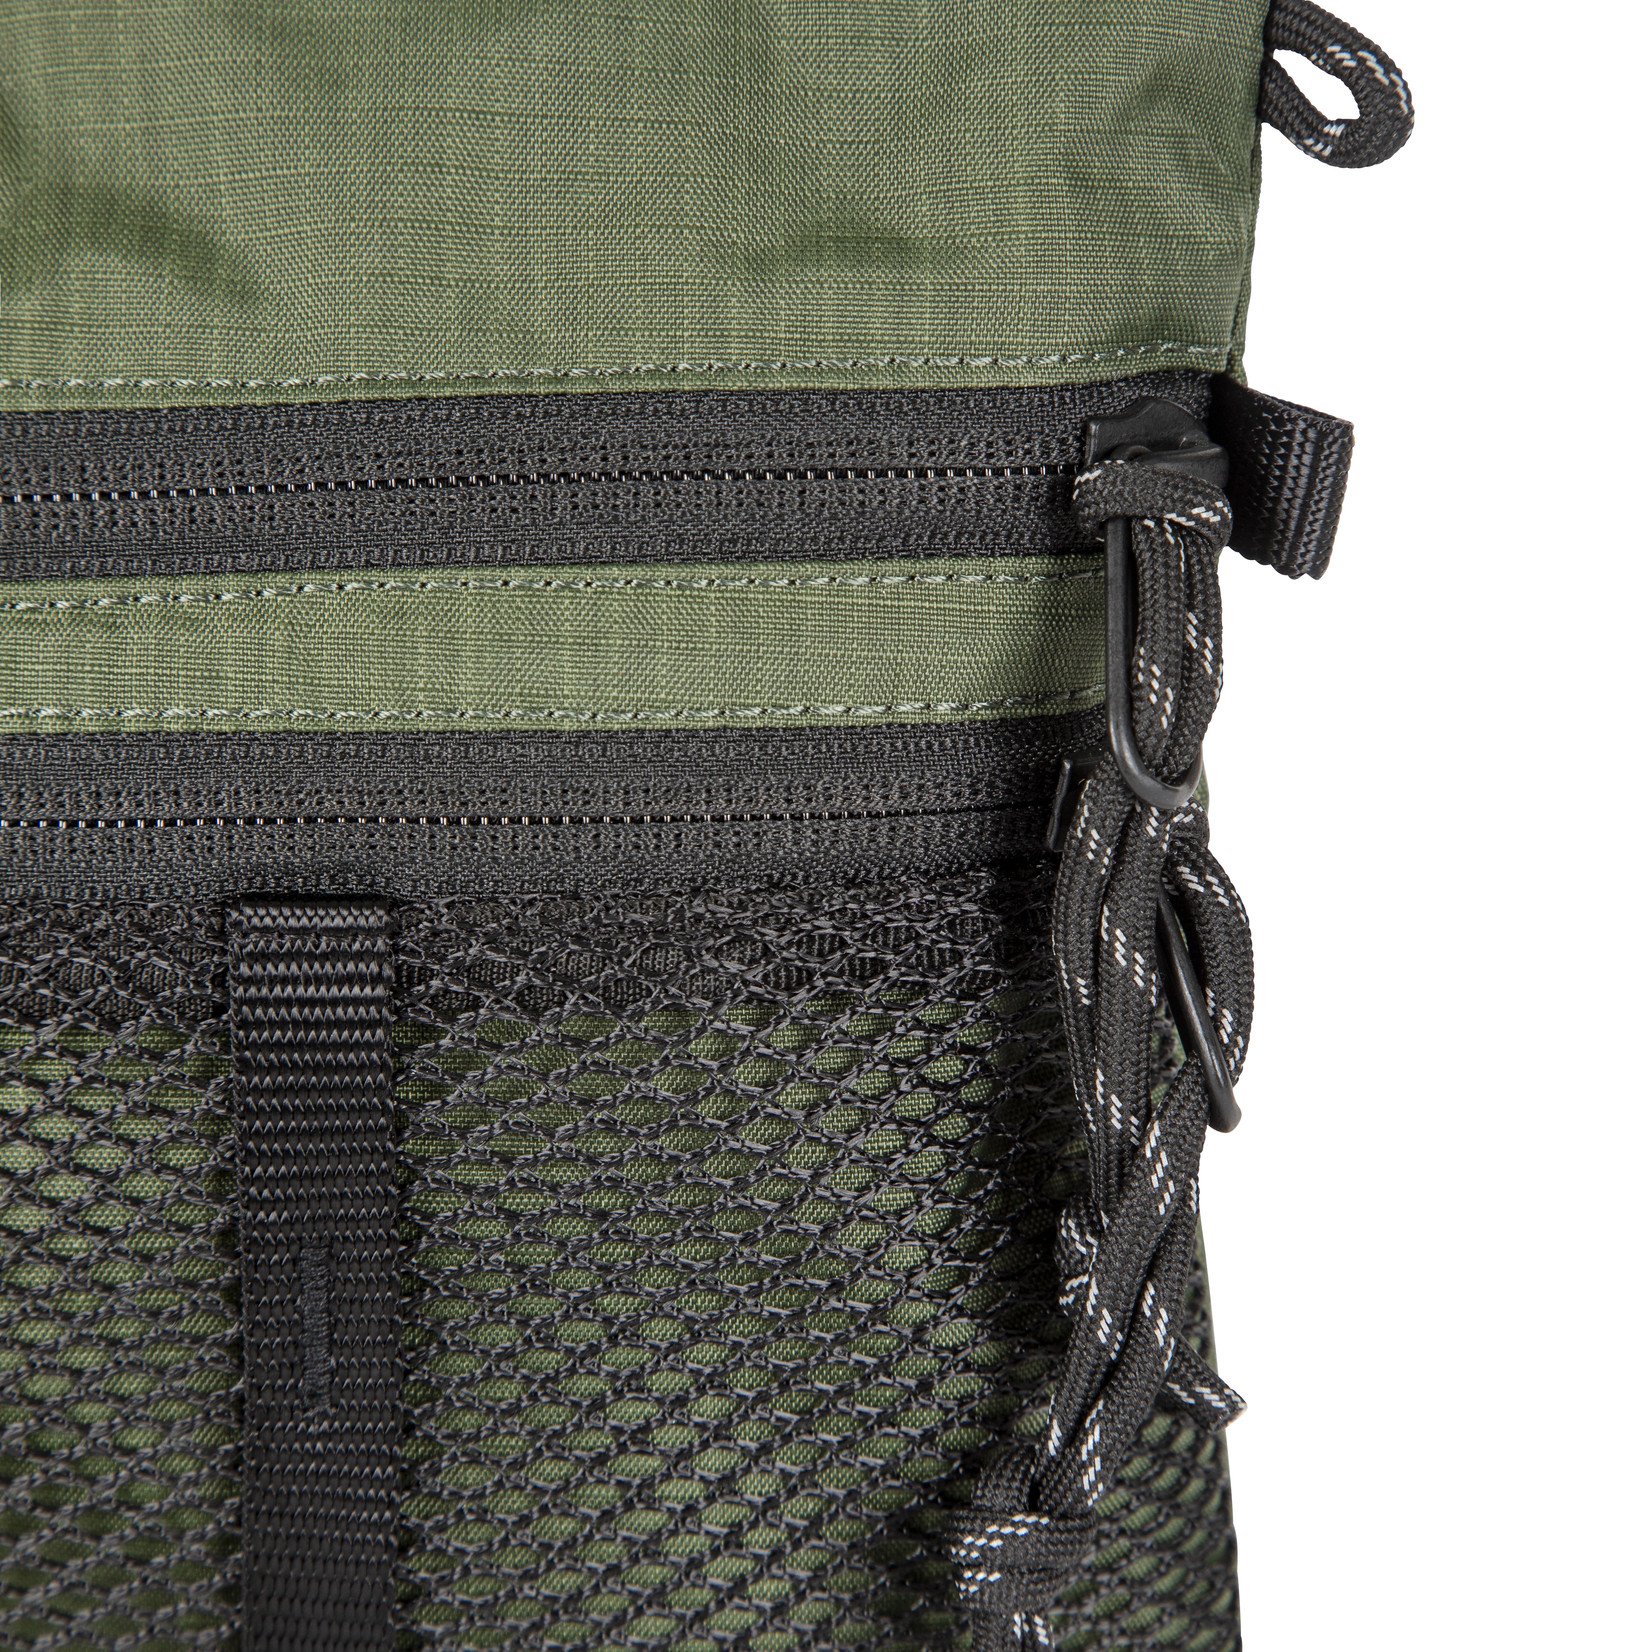 TOPO Designs TOPO Designs Mountain Accessory Shoulder Bag